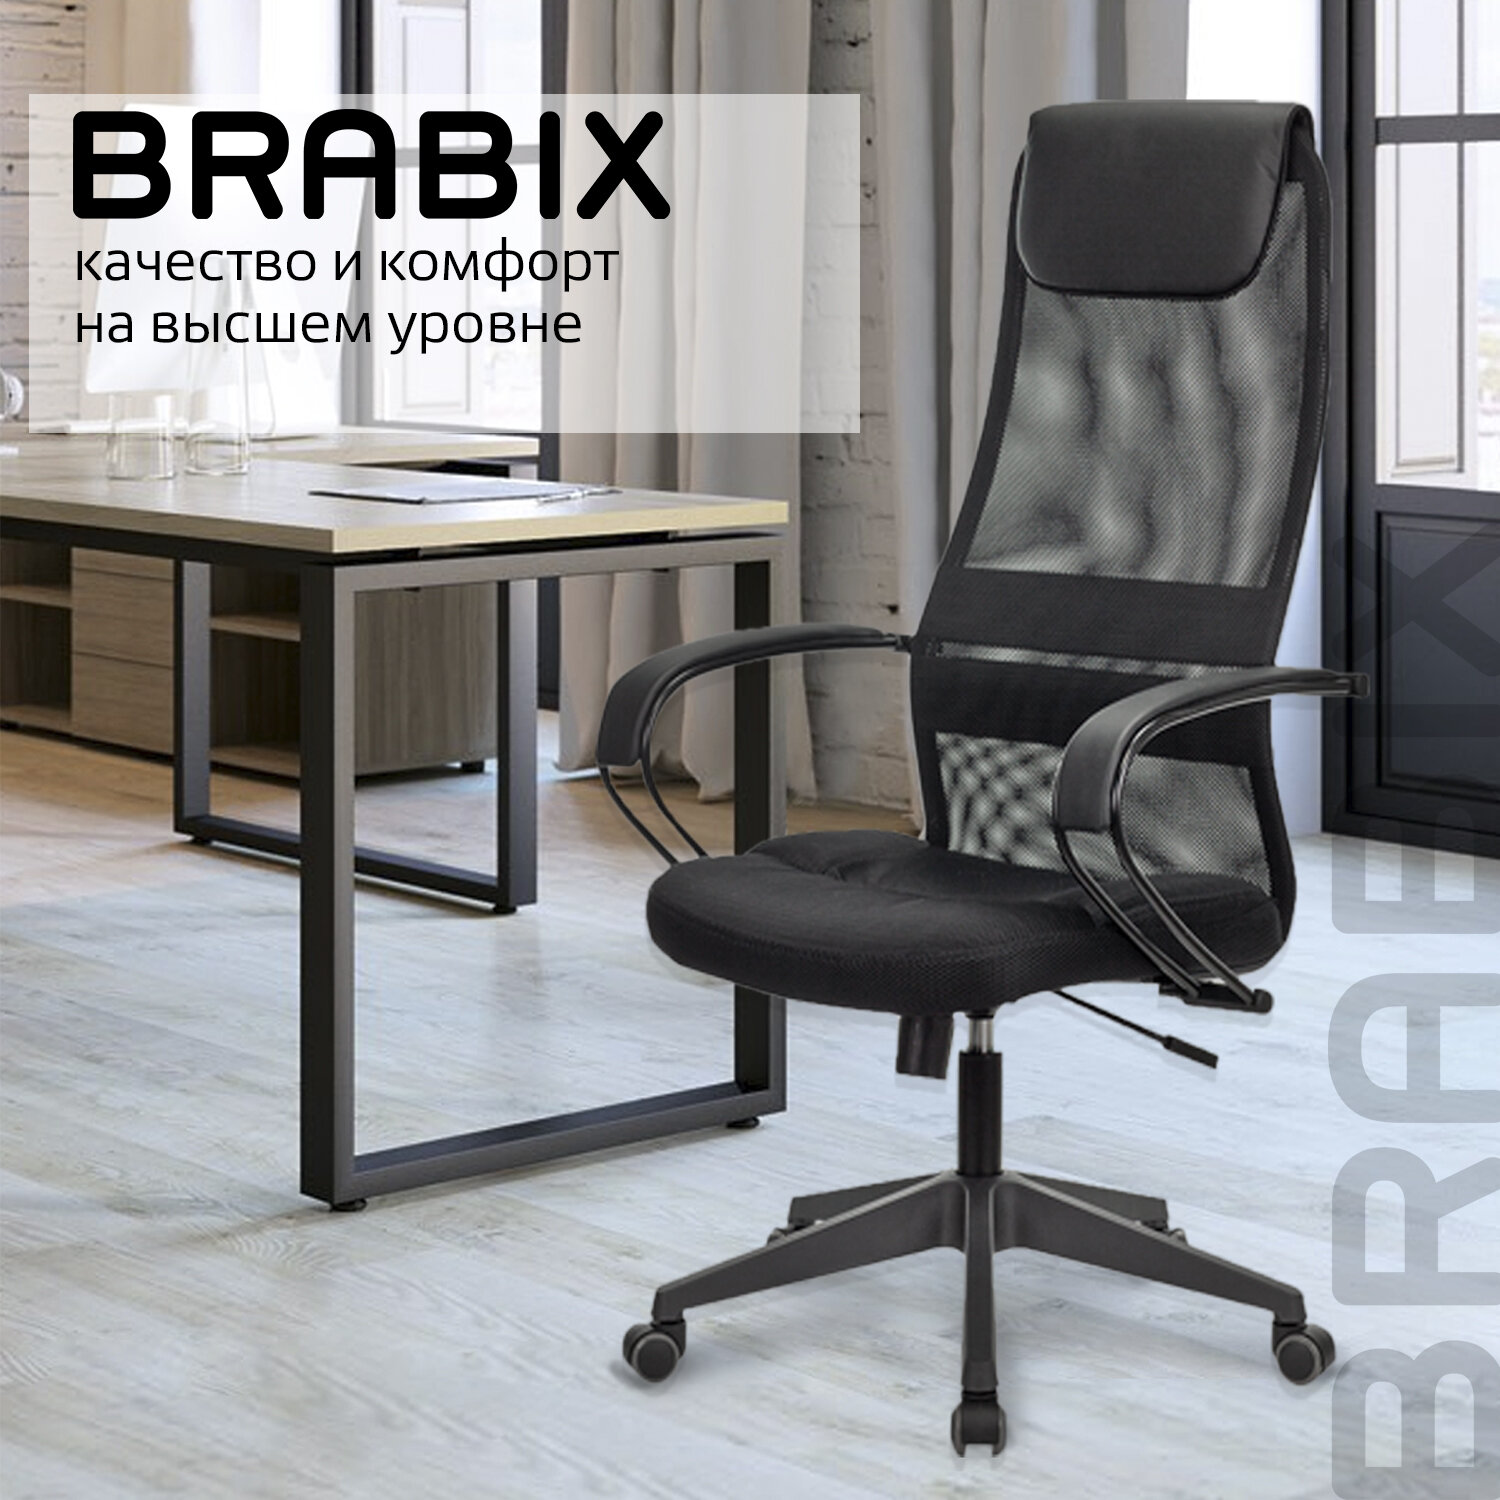 Brabix Stalker ex-608 pl